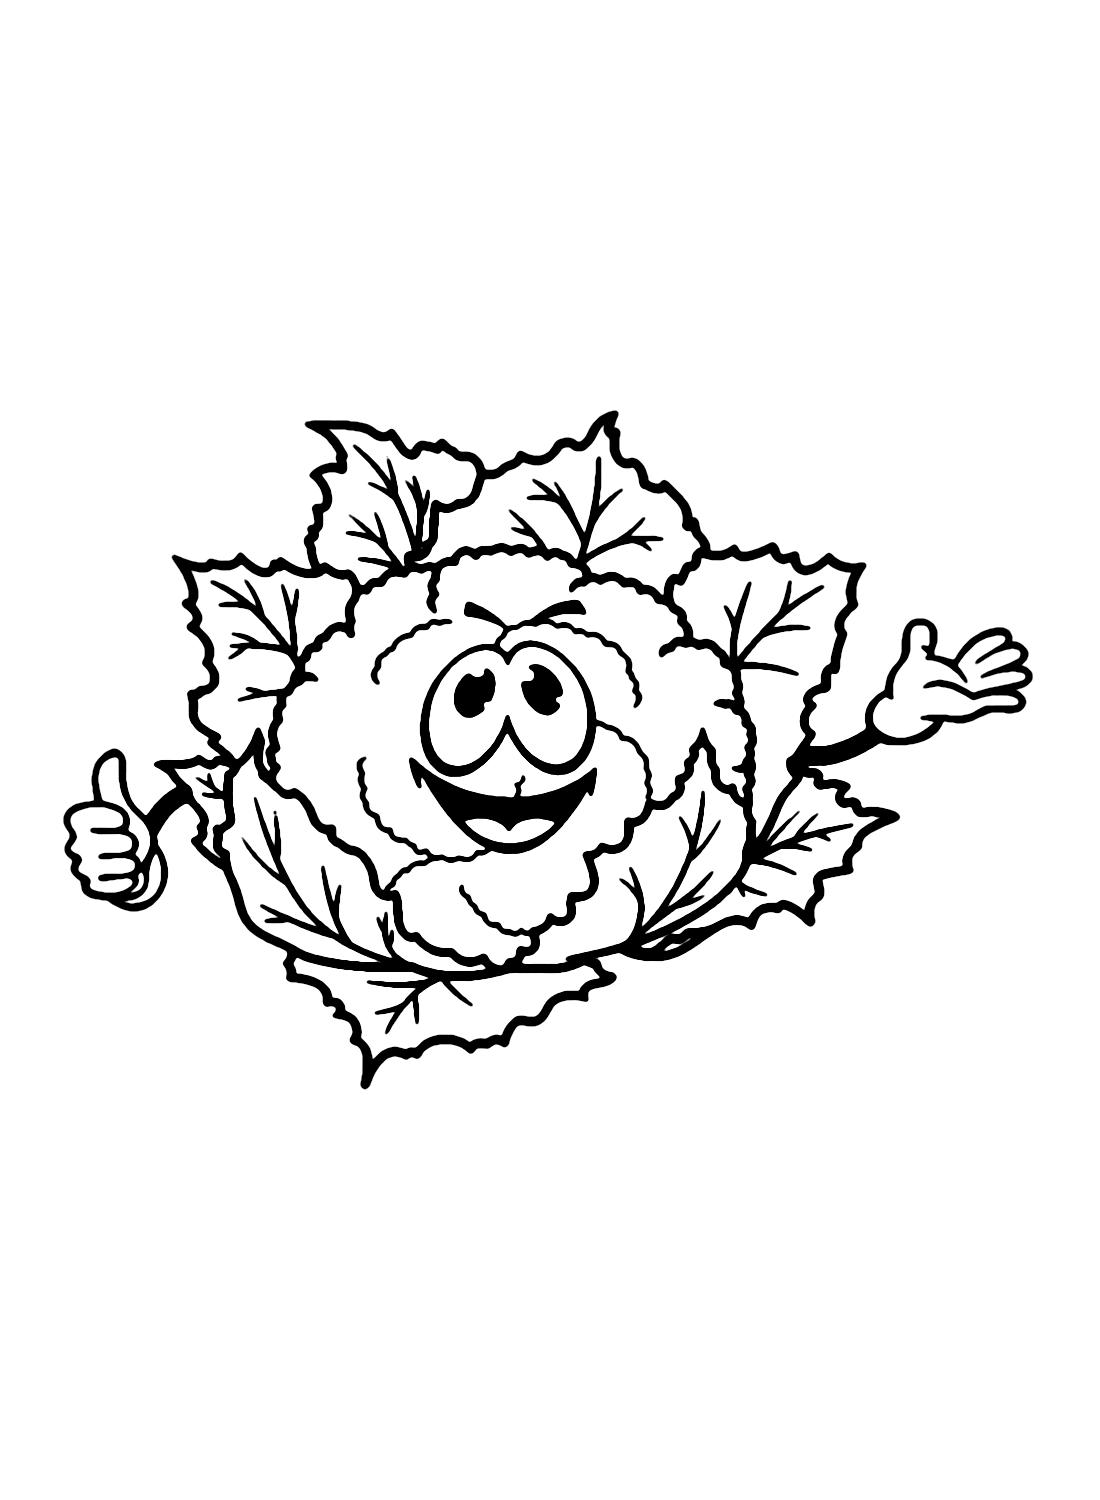 Caricature de chou-fleur de chou-fleur